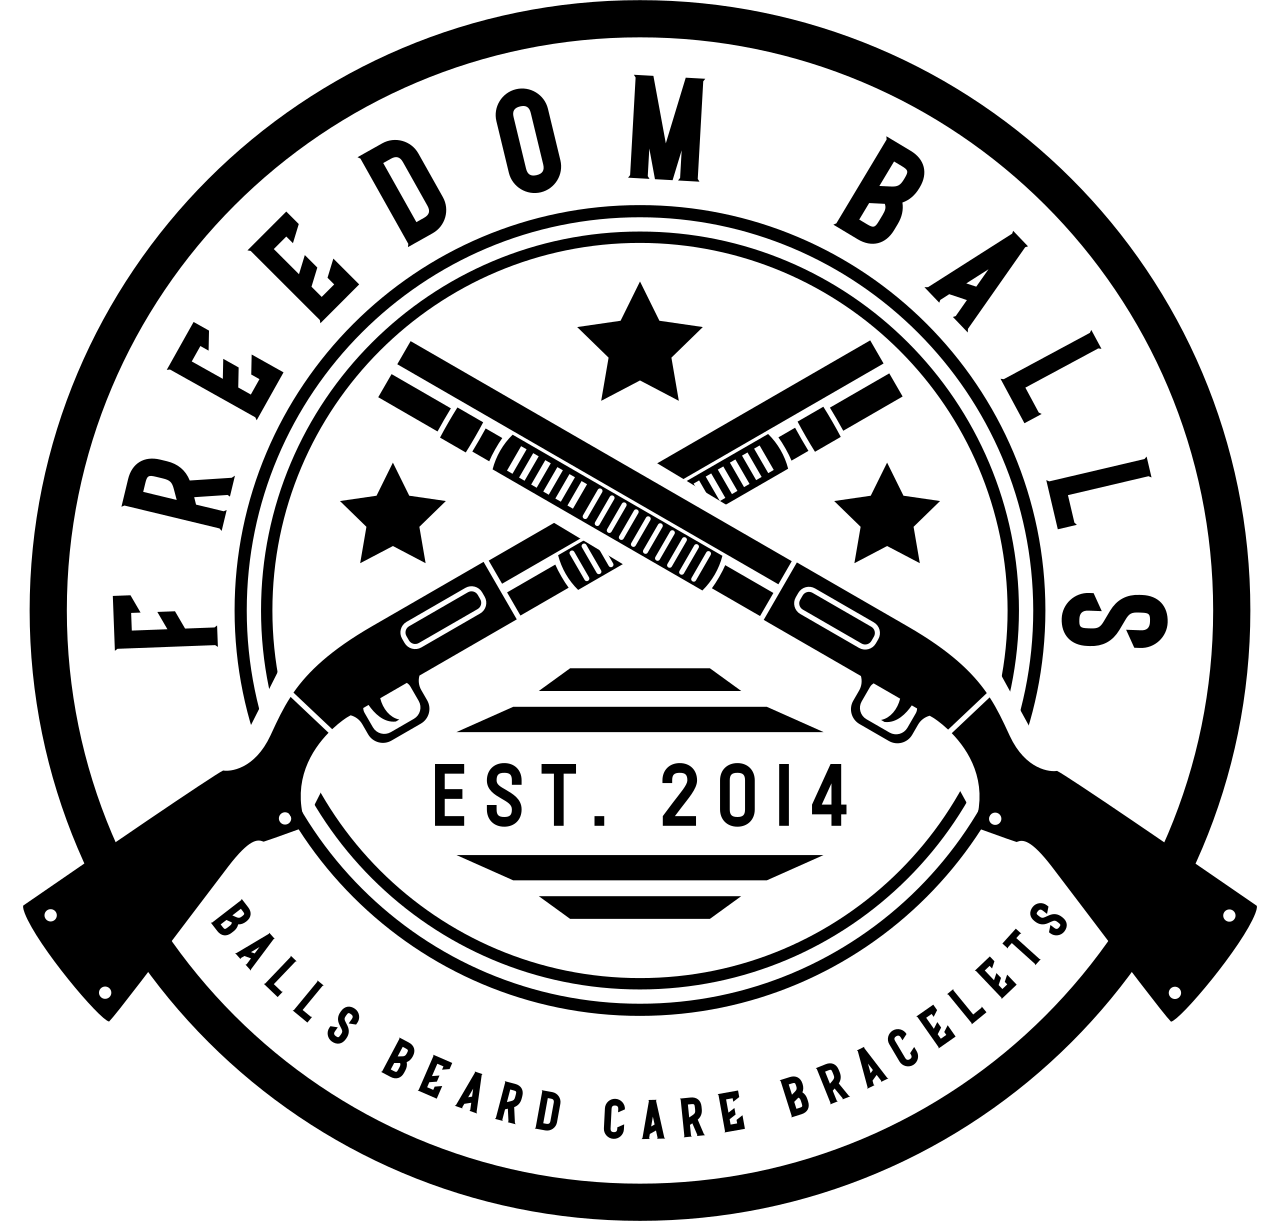 Freedom Balls's logo